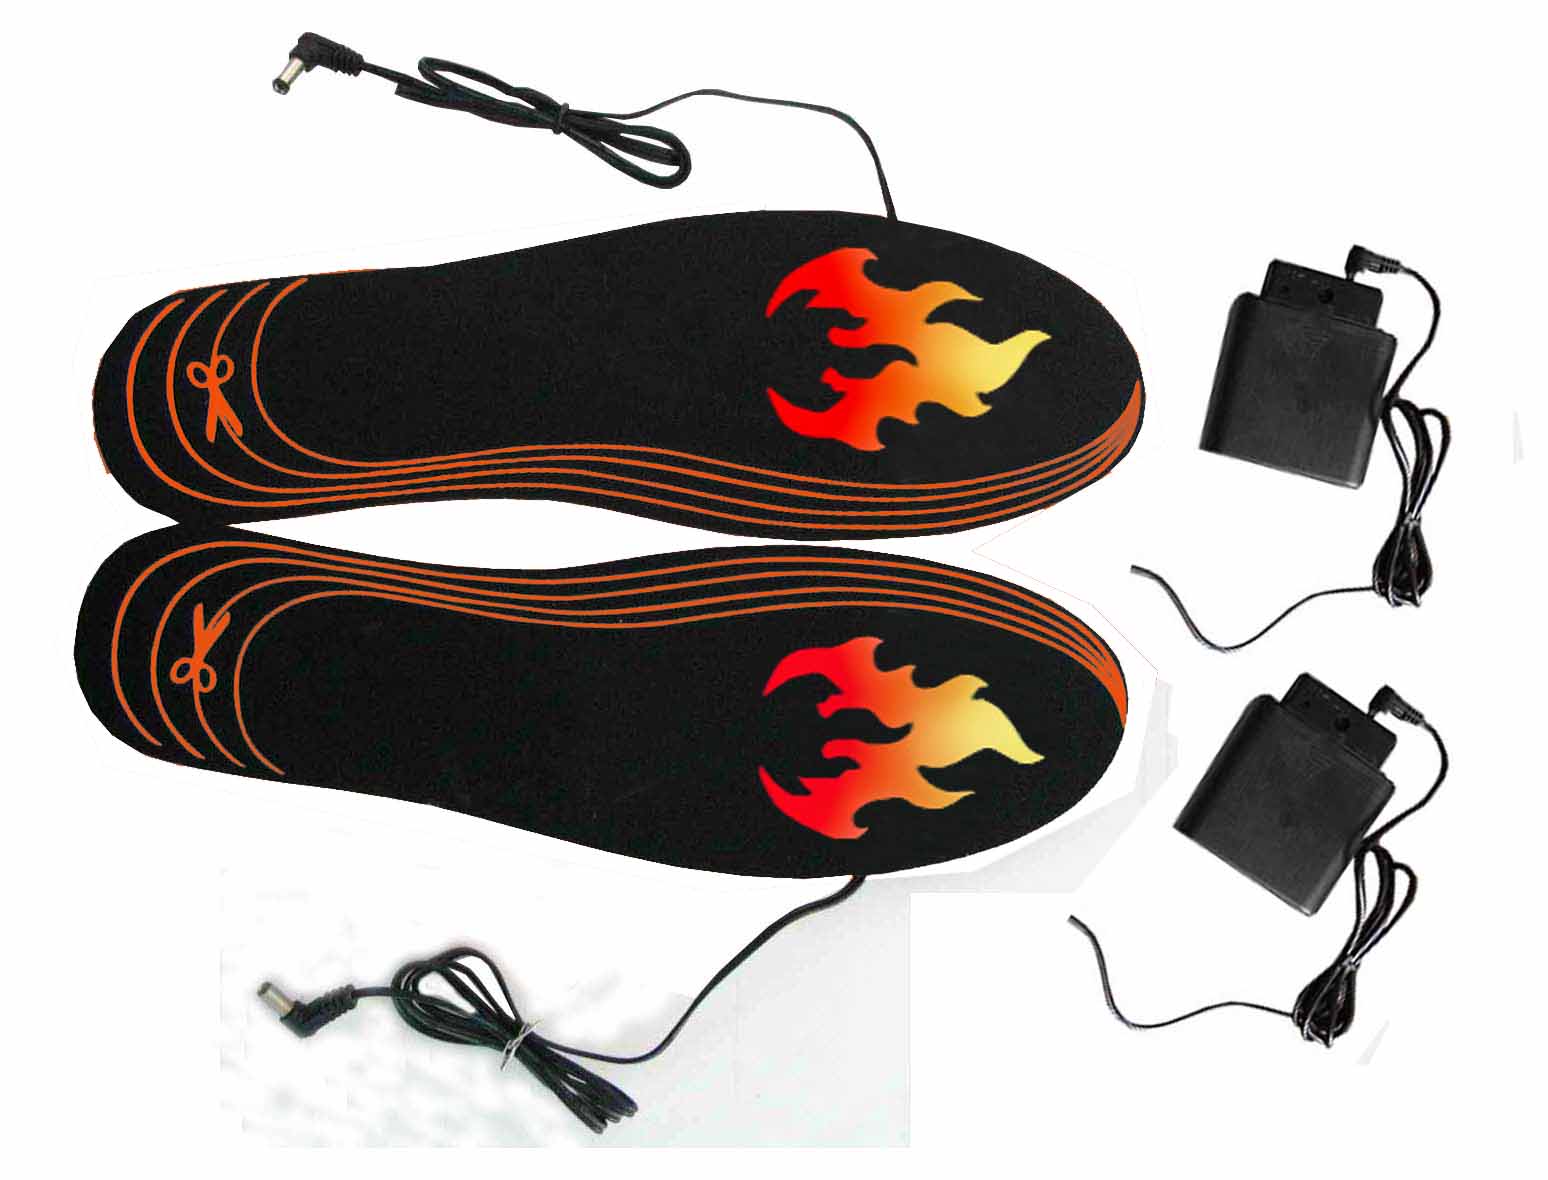  Rechargeable Battery Heating Shoe Insole Heated Foor Warmer (Batterie rechargeable Chauffage semelles de chaussures chauffants Foor Warmer)